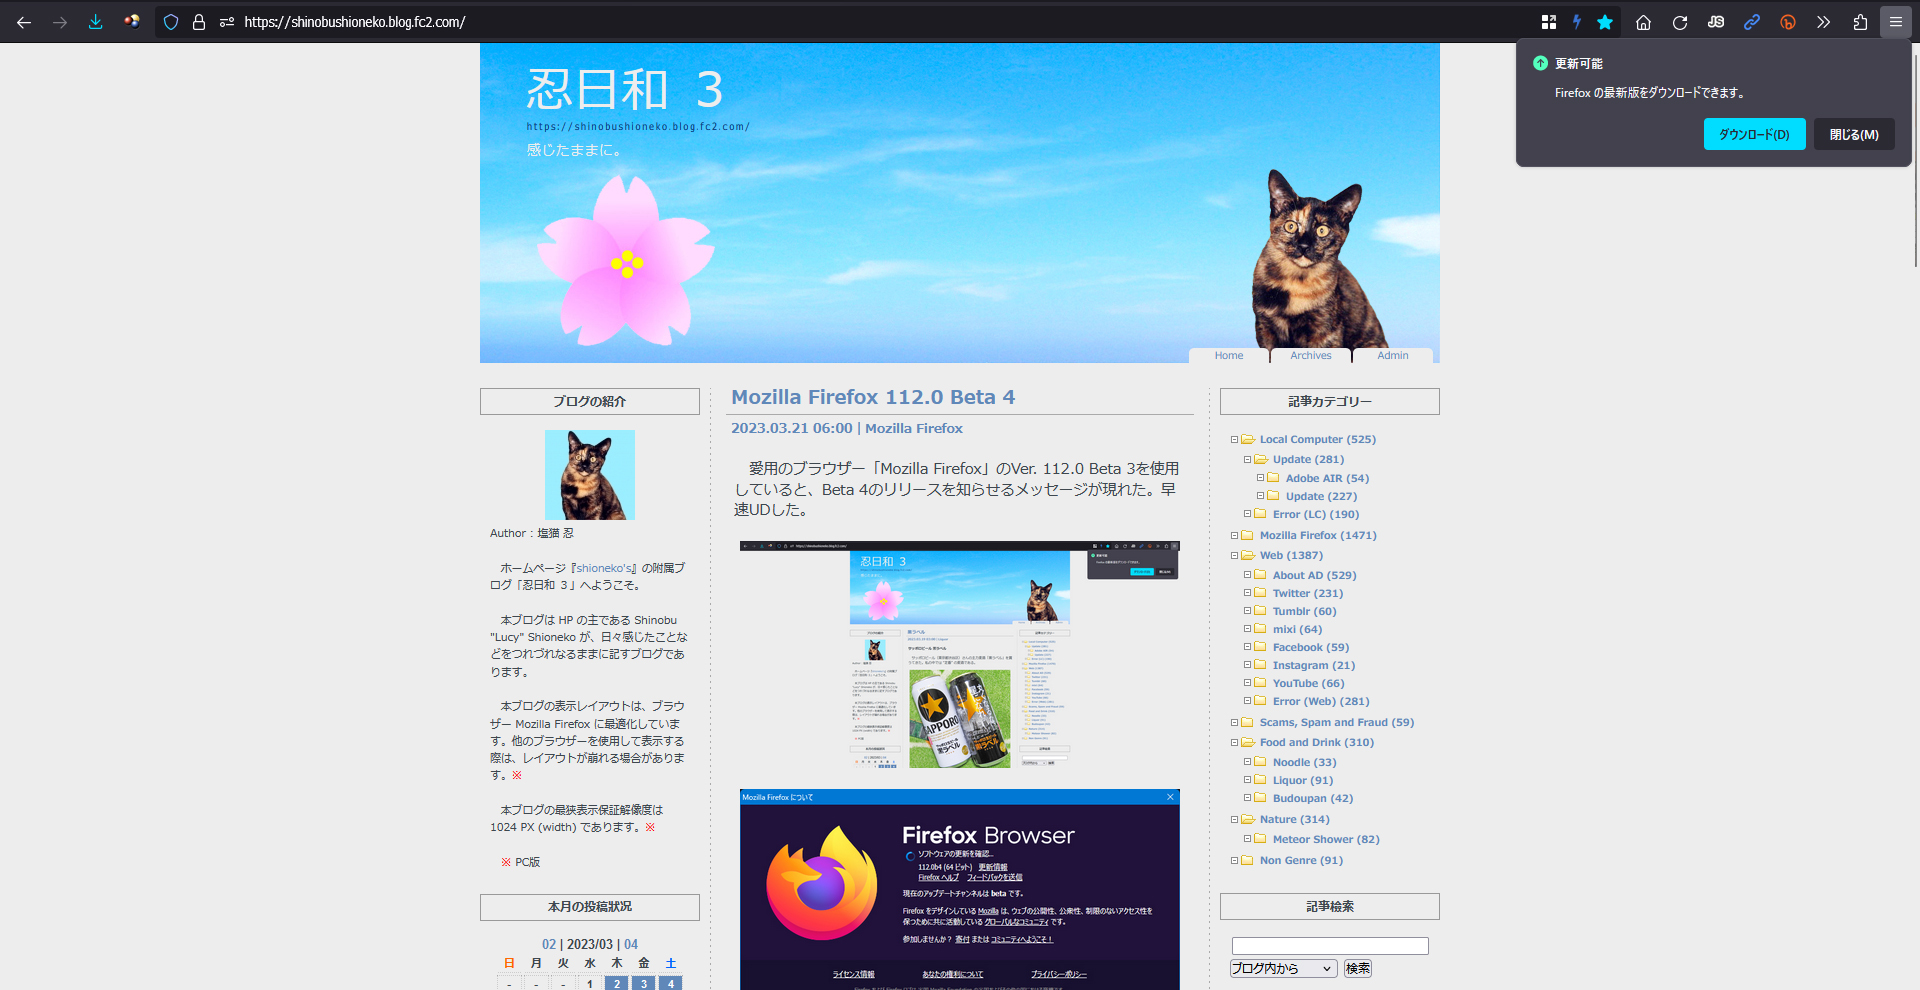 Mozilla Firefox 112.0 Beta 6